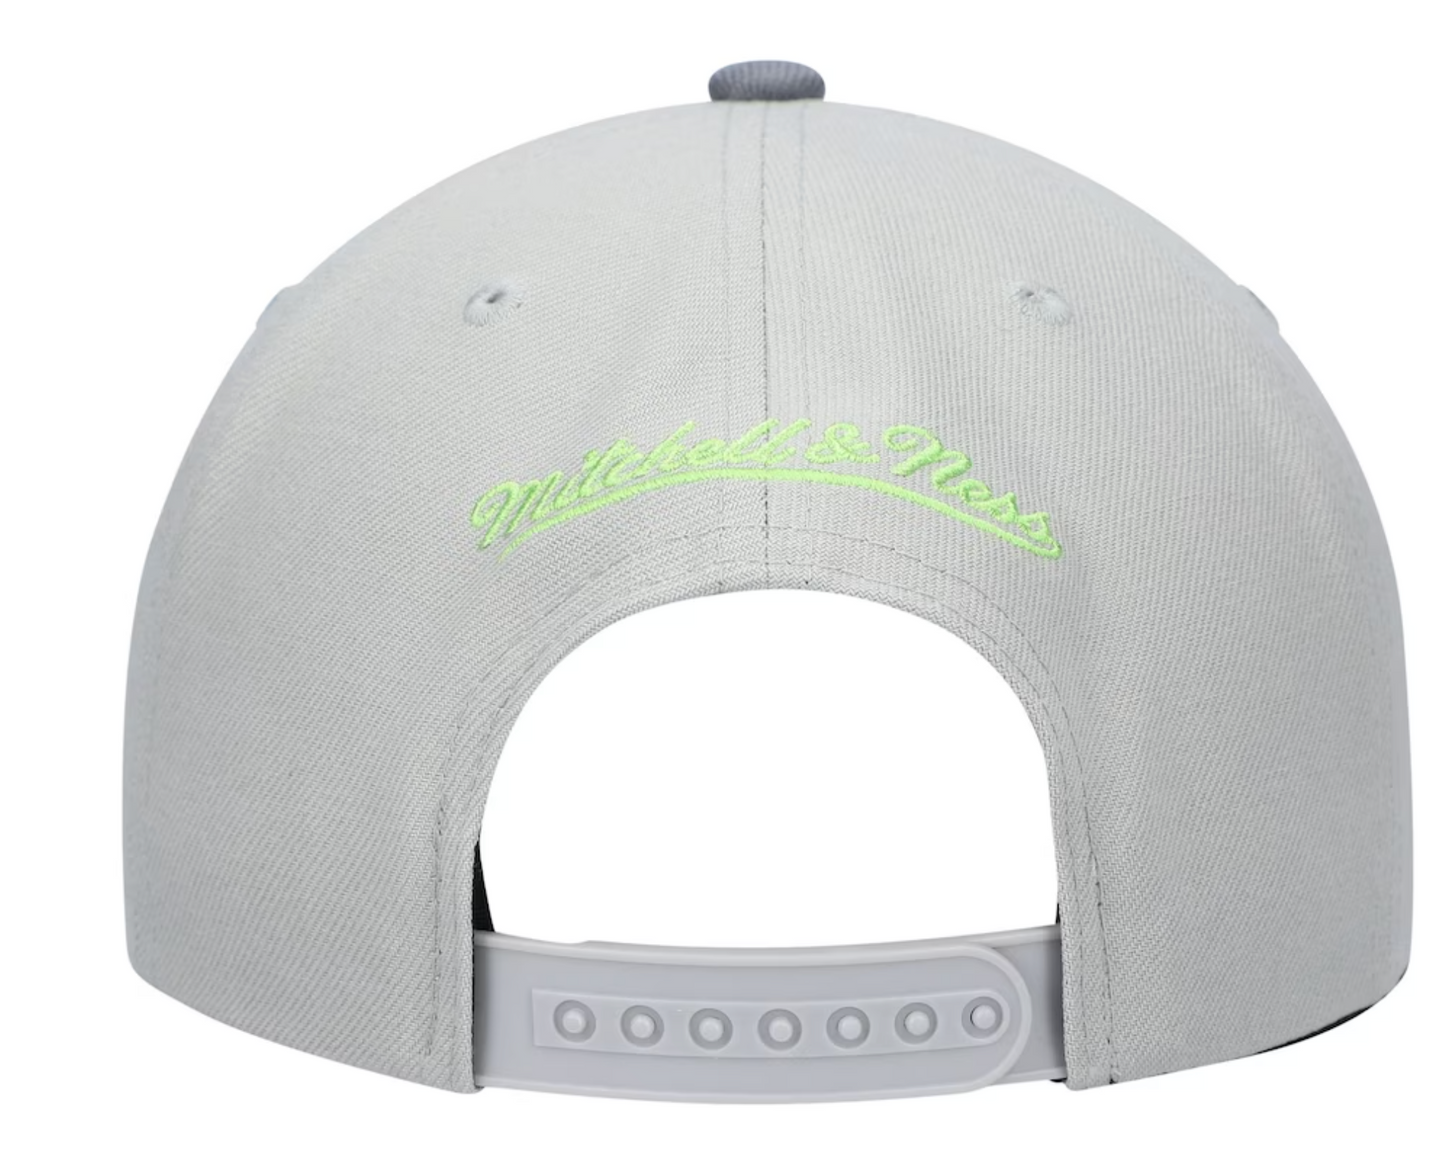 Men's Mitchell & Ness Brooklyn Nets NBA Green Bean Adjustable Snapback Hat